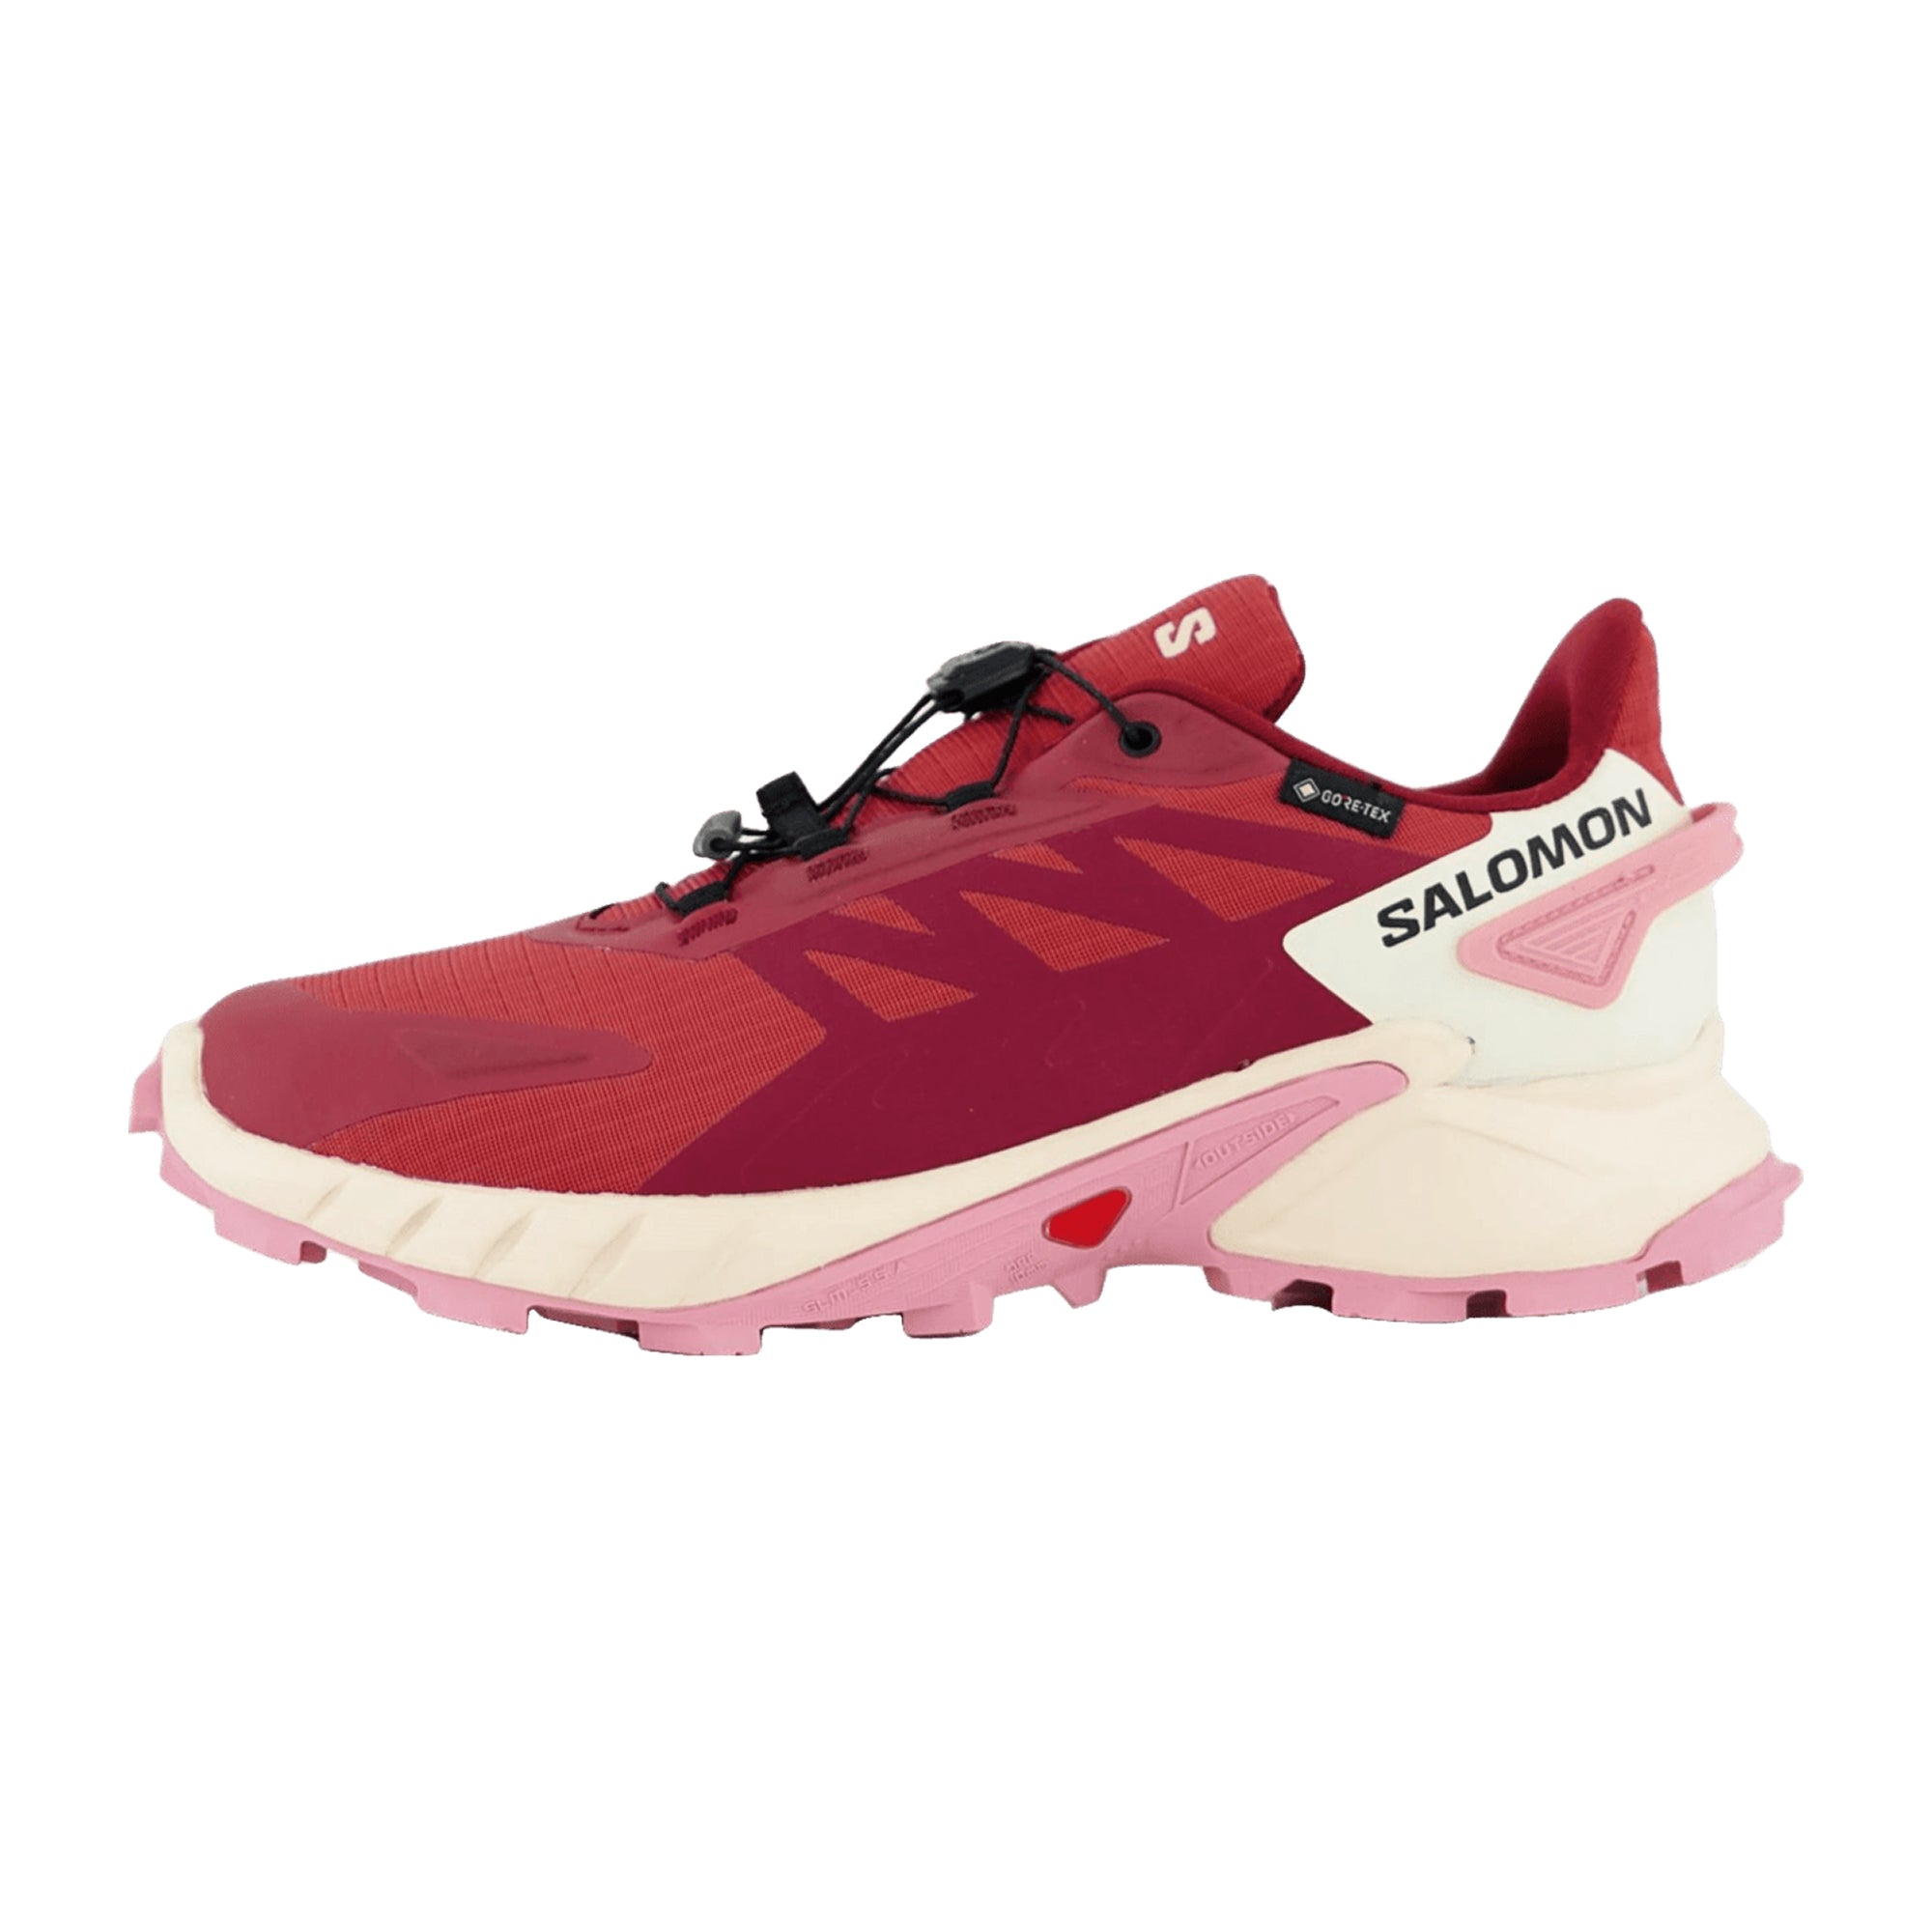 Salomon Supercross 4 GTX W for women, red, shoes